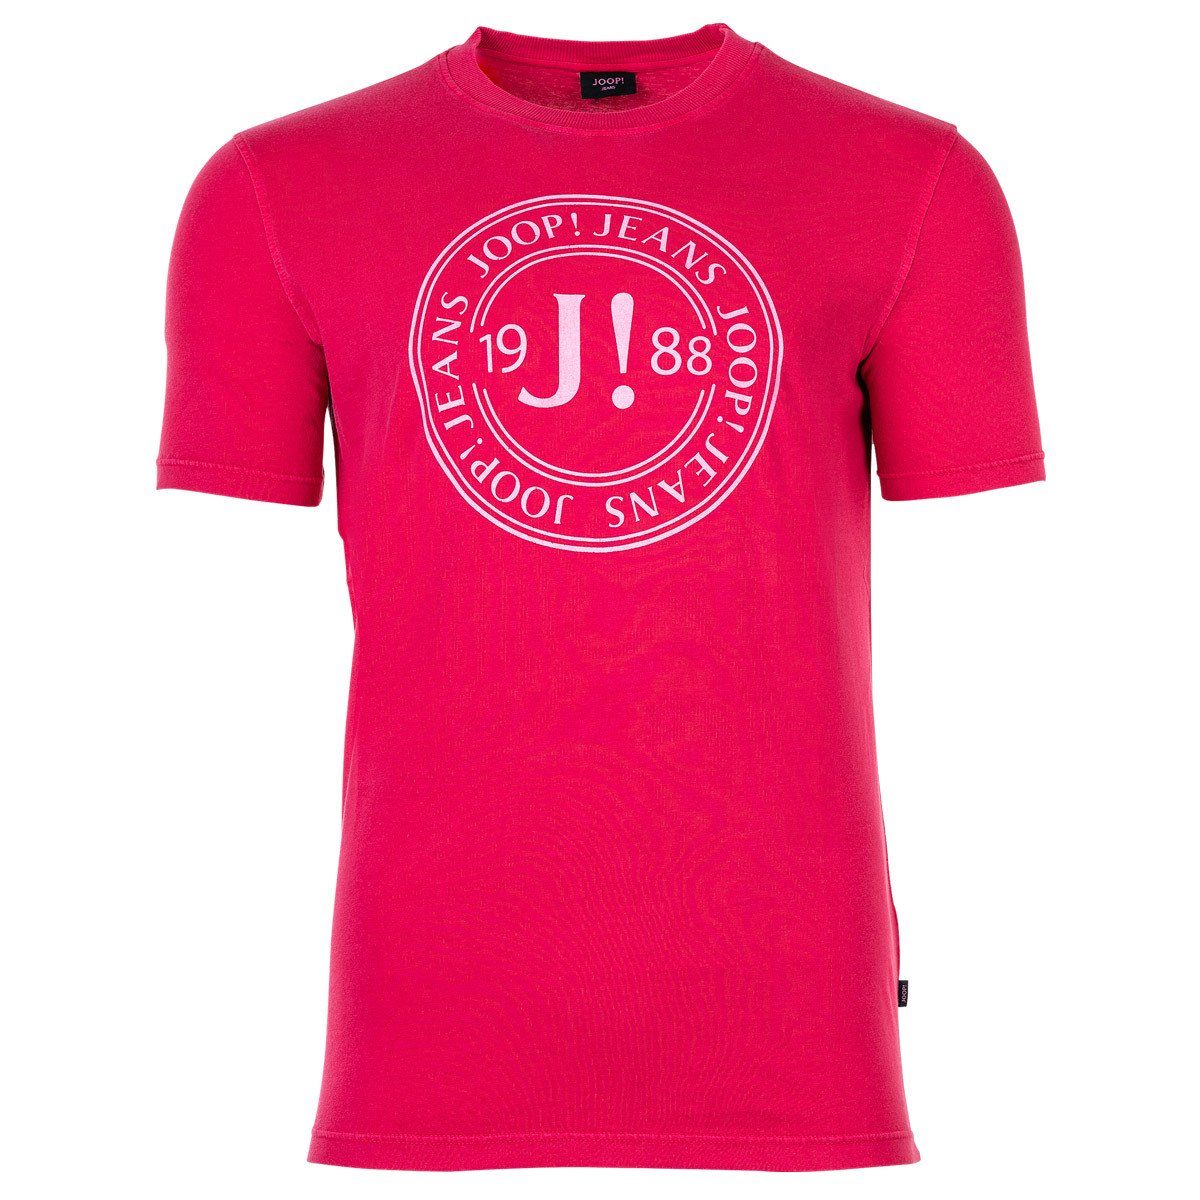 Joop Jeans T-Shirt Herren T-Shirt - JJ222J016, Rundhals, Halbarm Pink